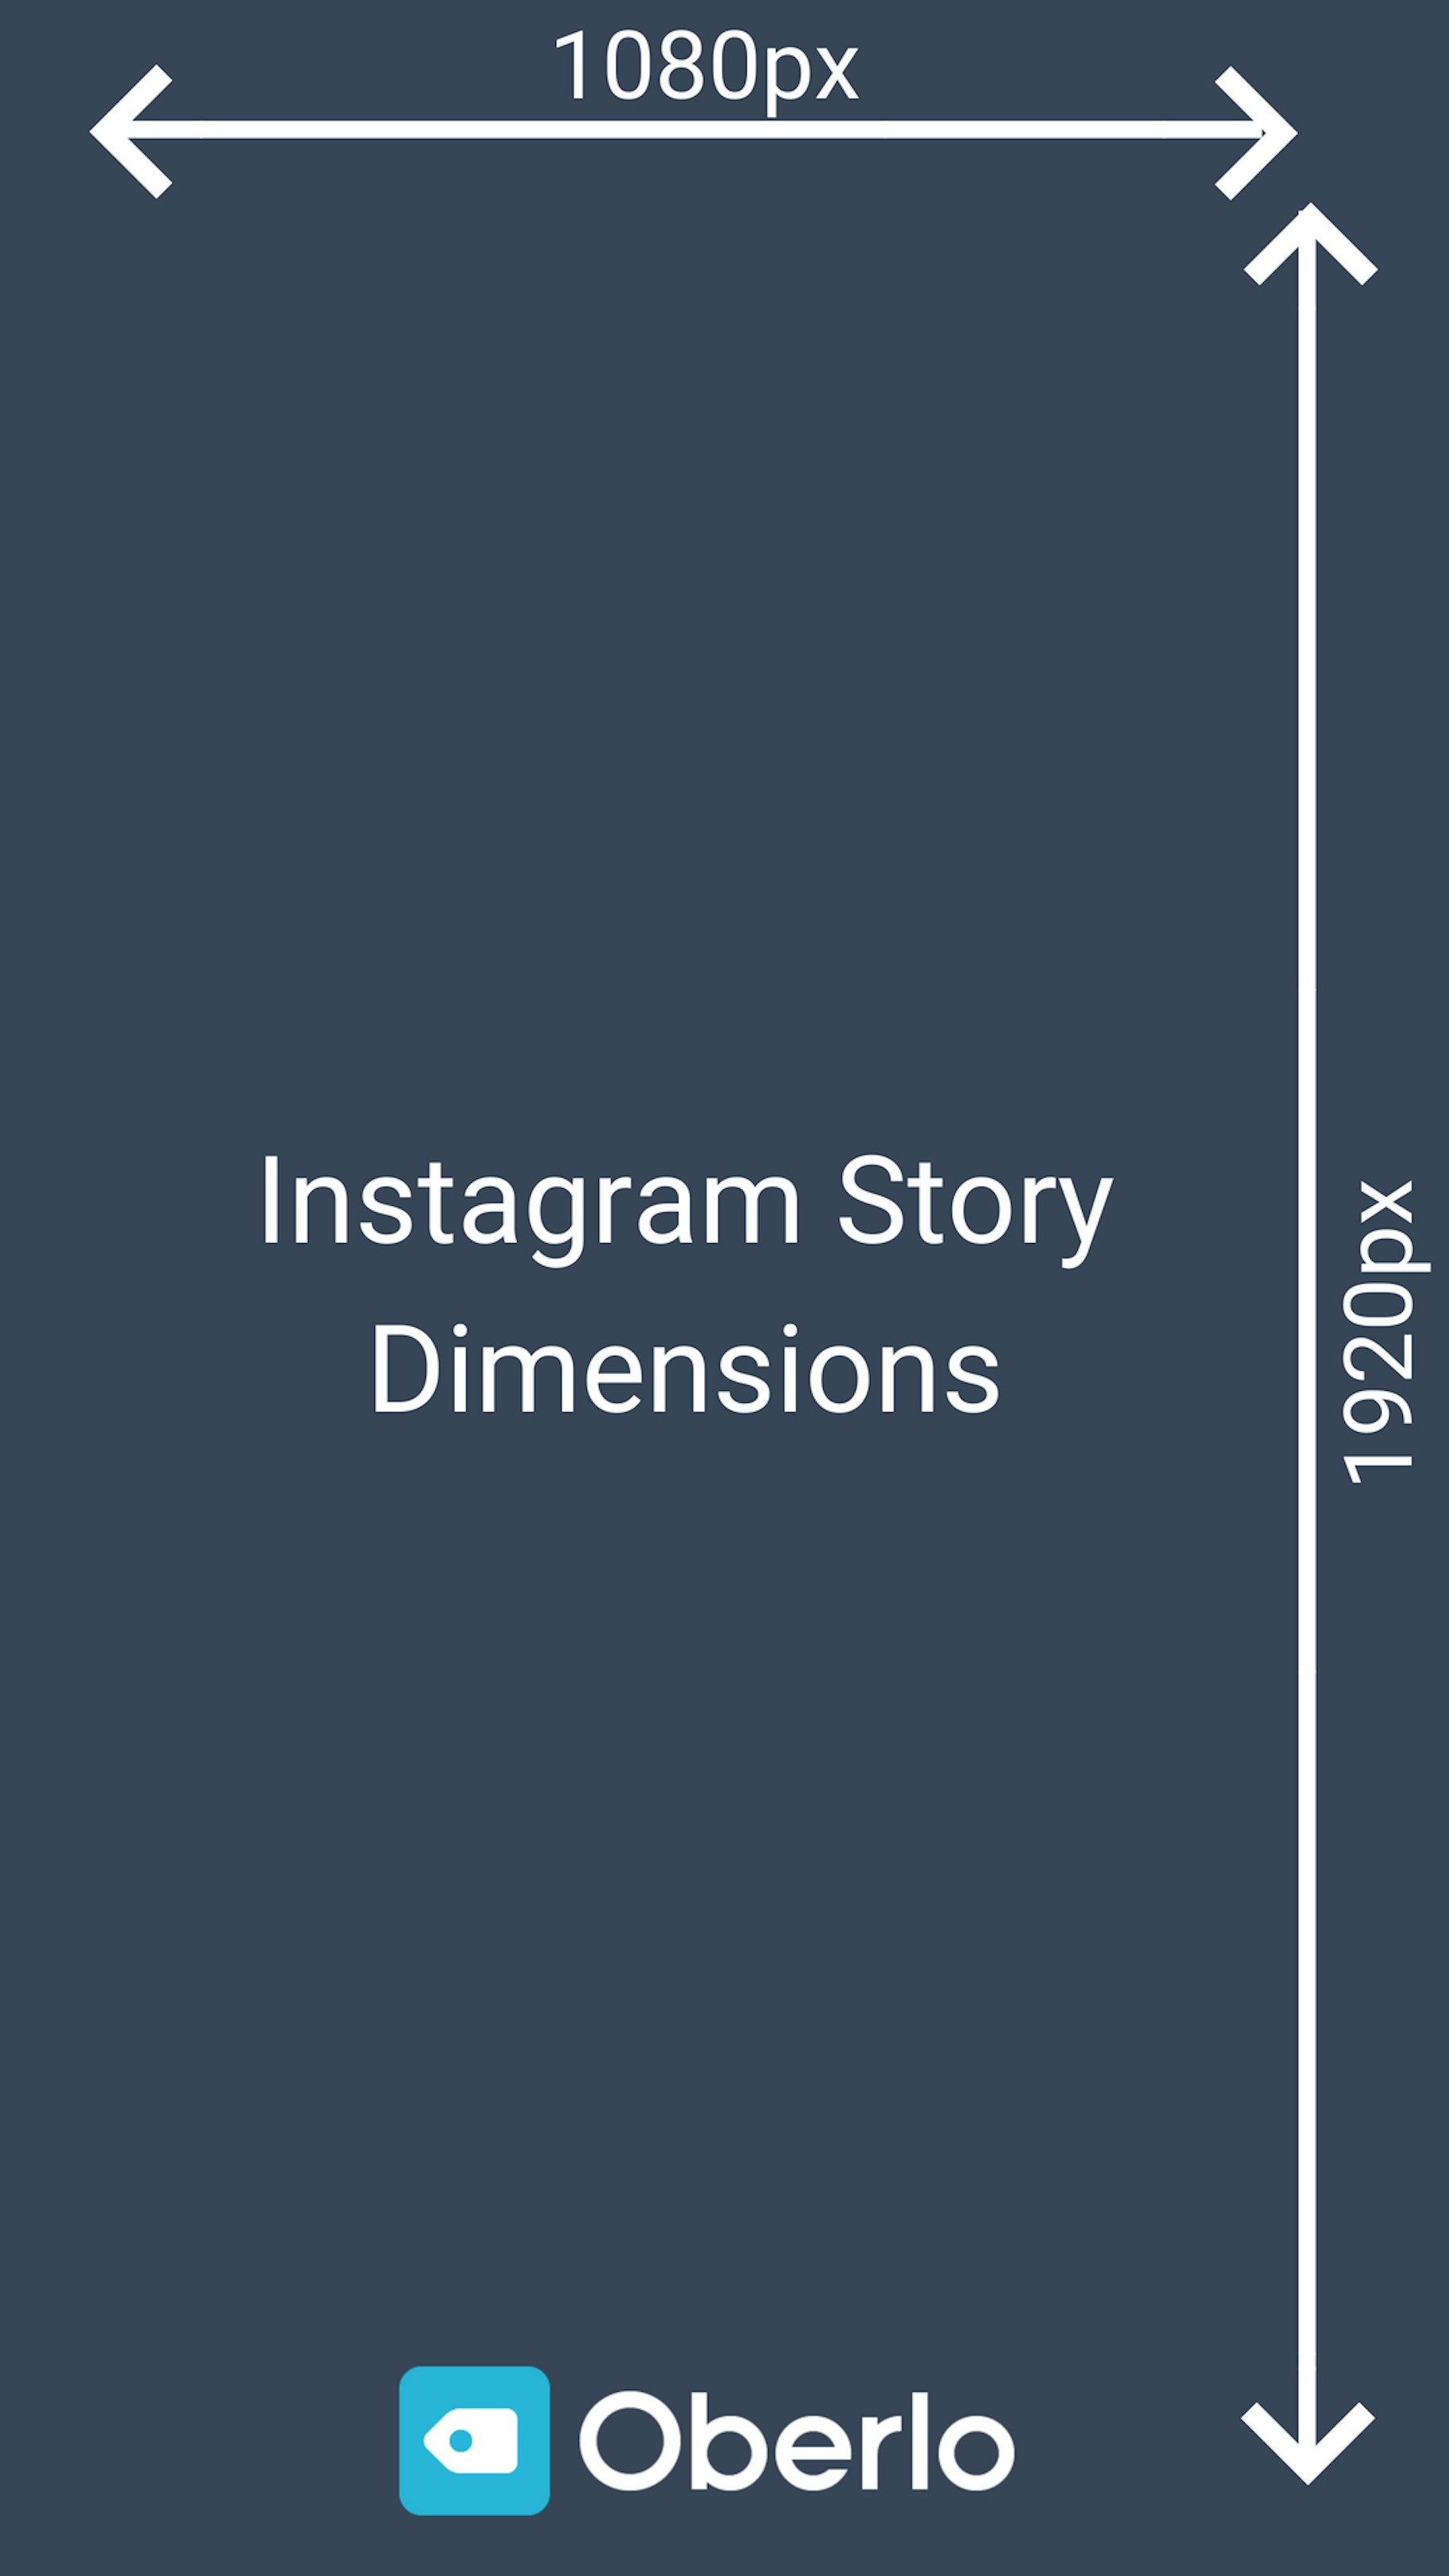  Instagram Stories dimensiuni